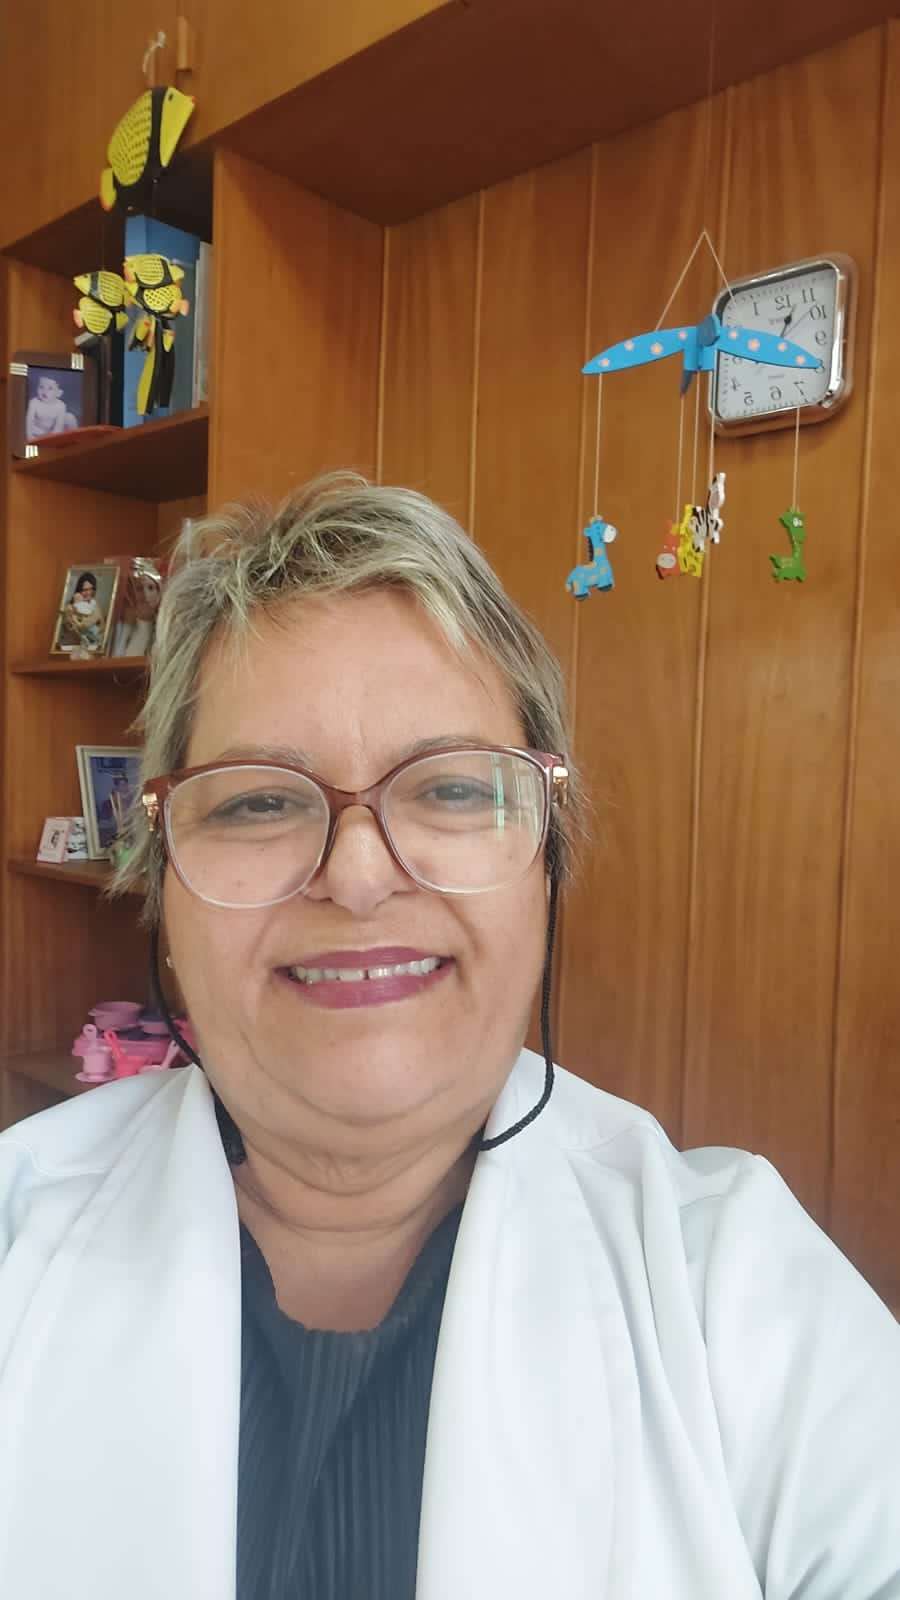 Dra. Ana Lucia